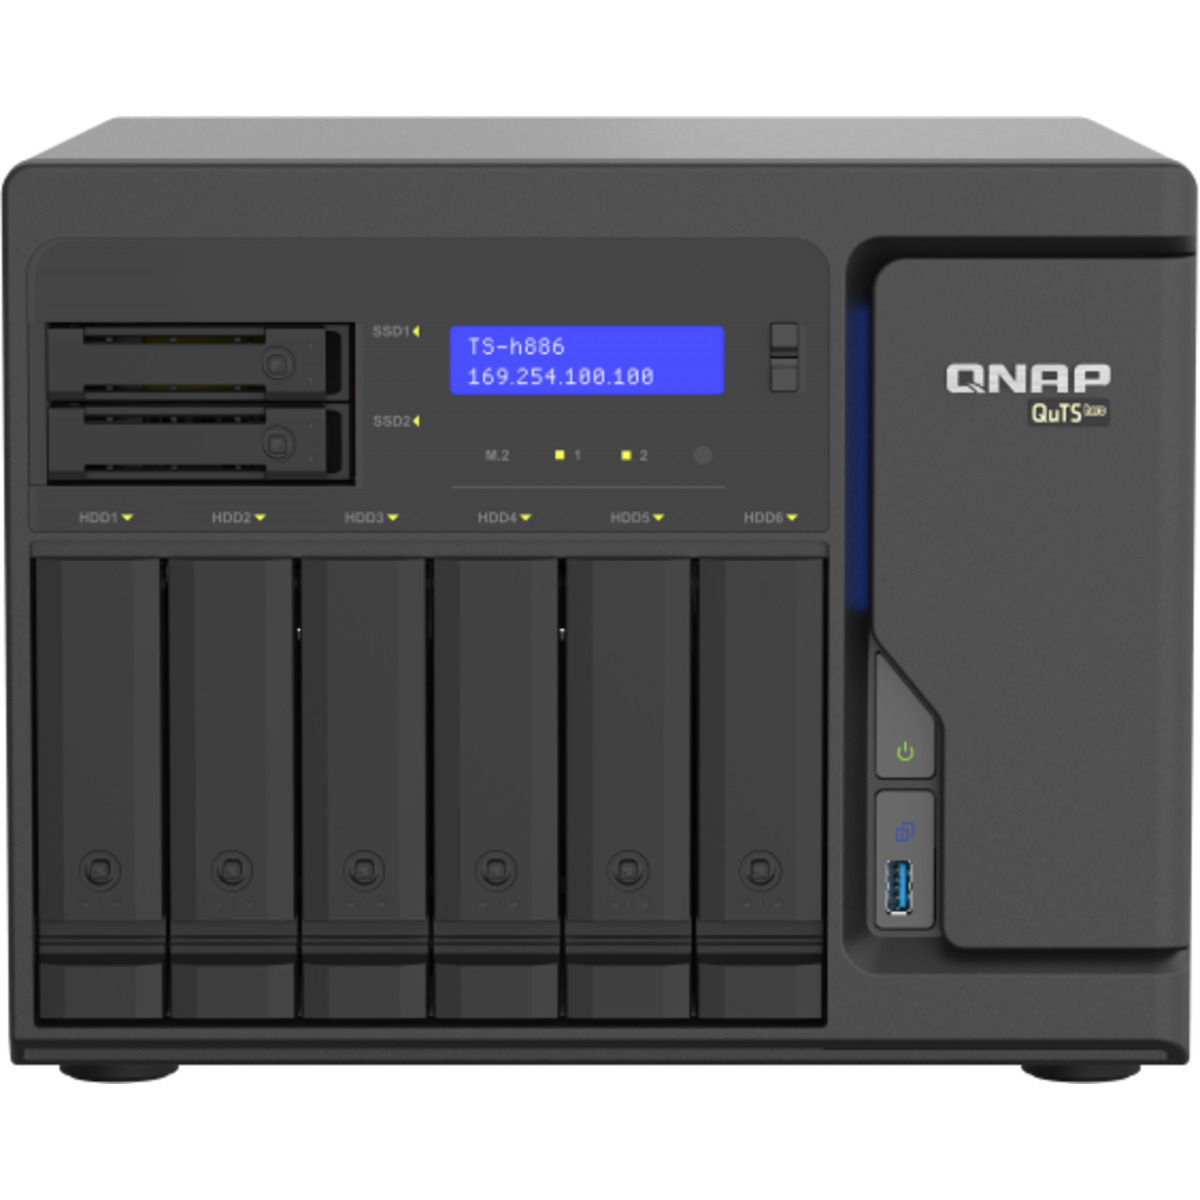 QNAP TS-h886 QuTS hero NAS 50tb 6+2-Bay Desktop Large Business / Enterprise NAS - Network Attached Storage Device 5x10tb Western Digital Gold WD102KRYZ 3.5 7200rpm SATA 6Gb/s HDD ENTERPRISE Class Drives Installed - Burn-In Tested TS-h886 QuTS hero NAS